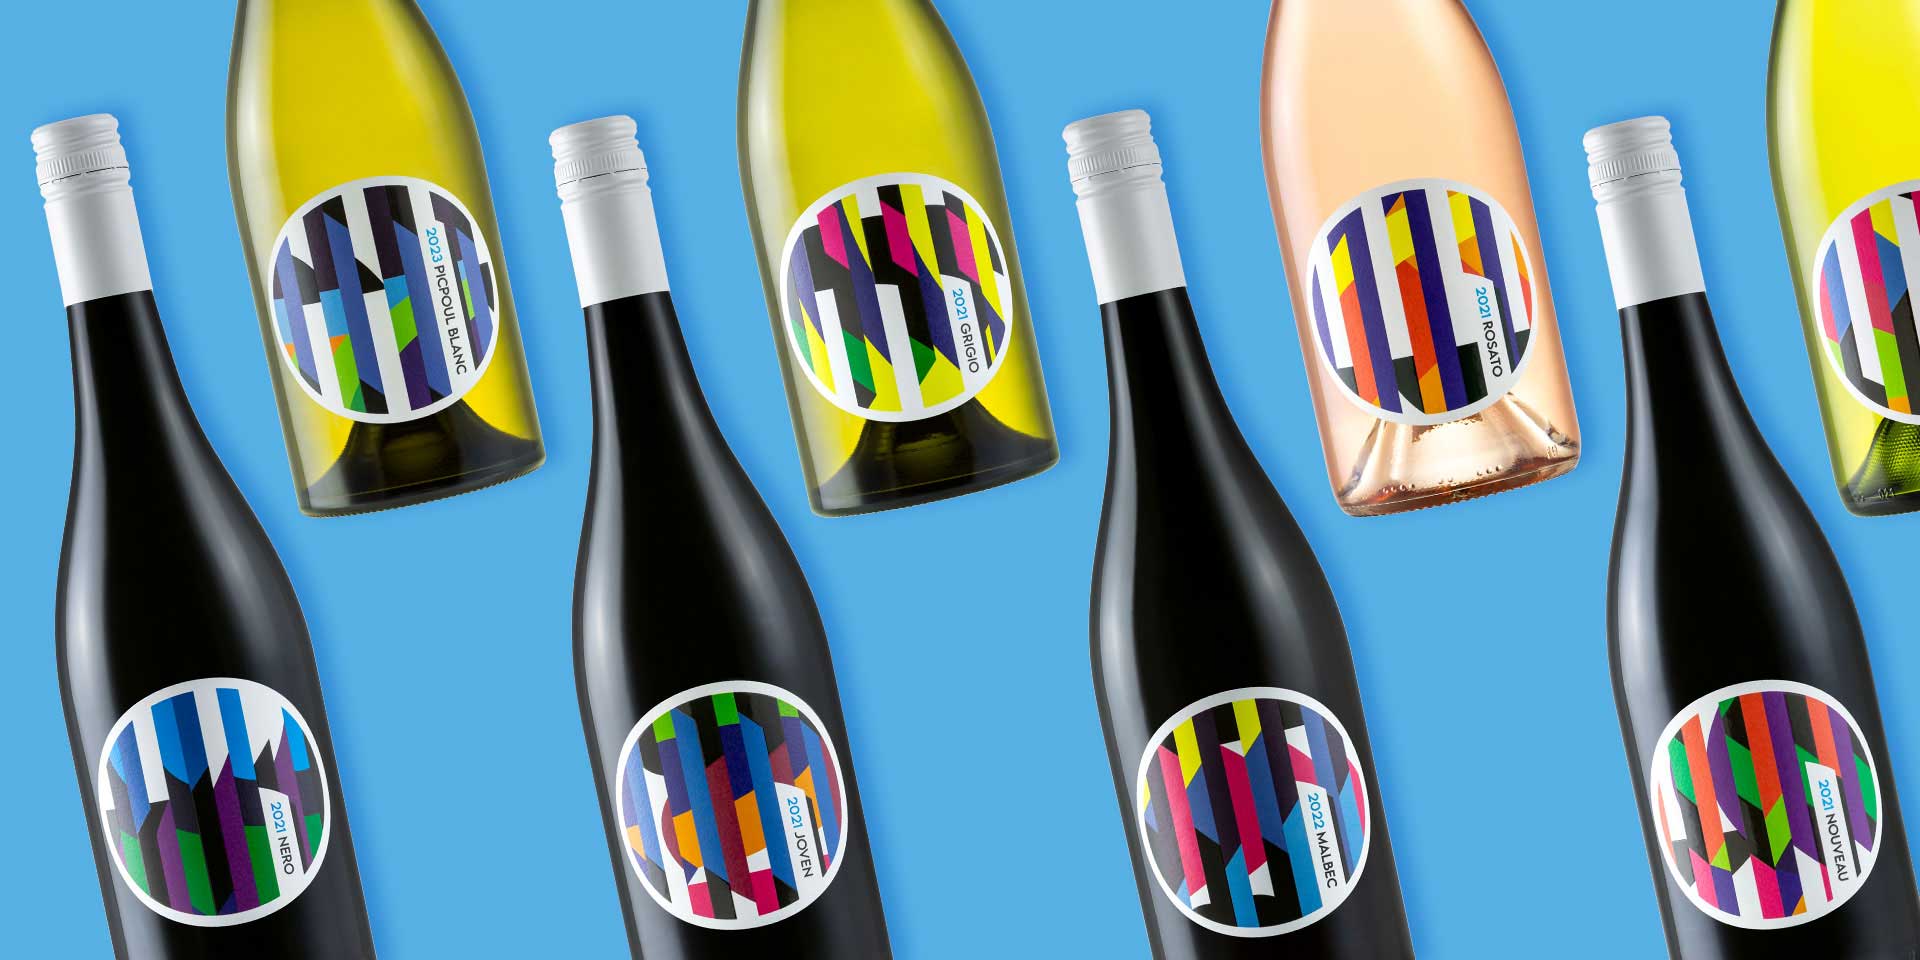 Mercer Wines Label Designs